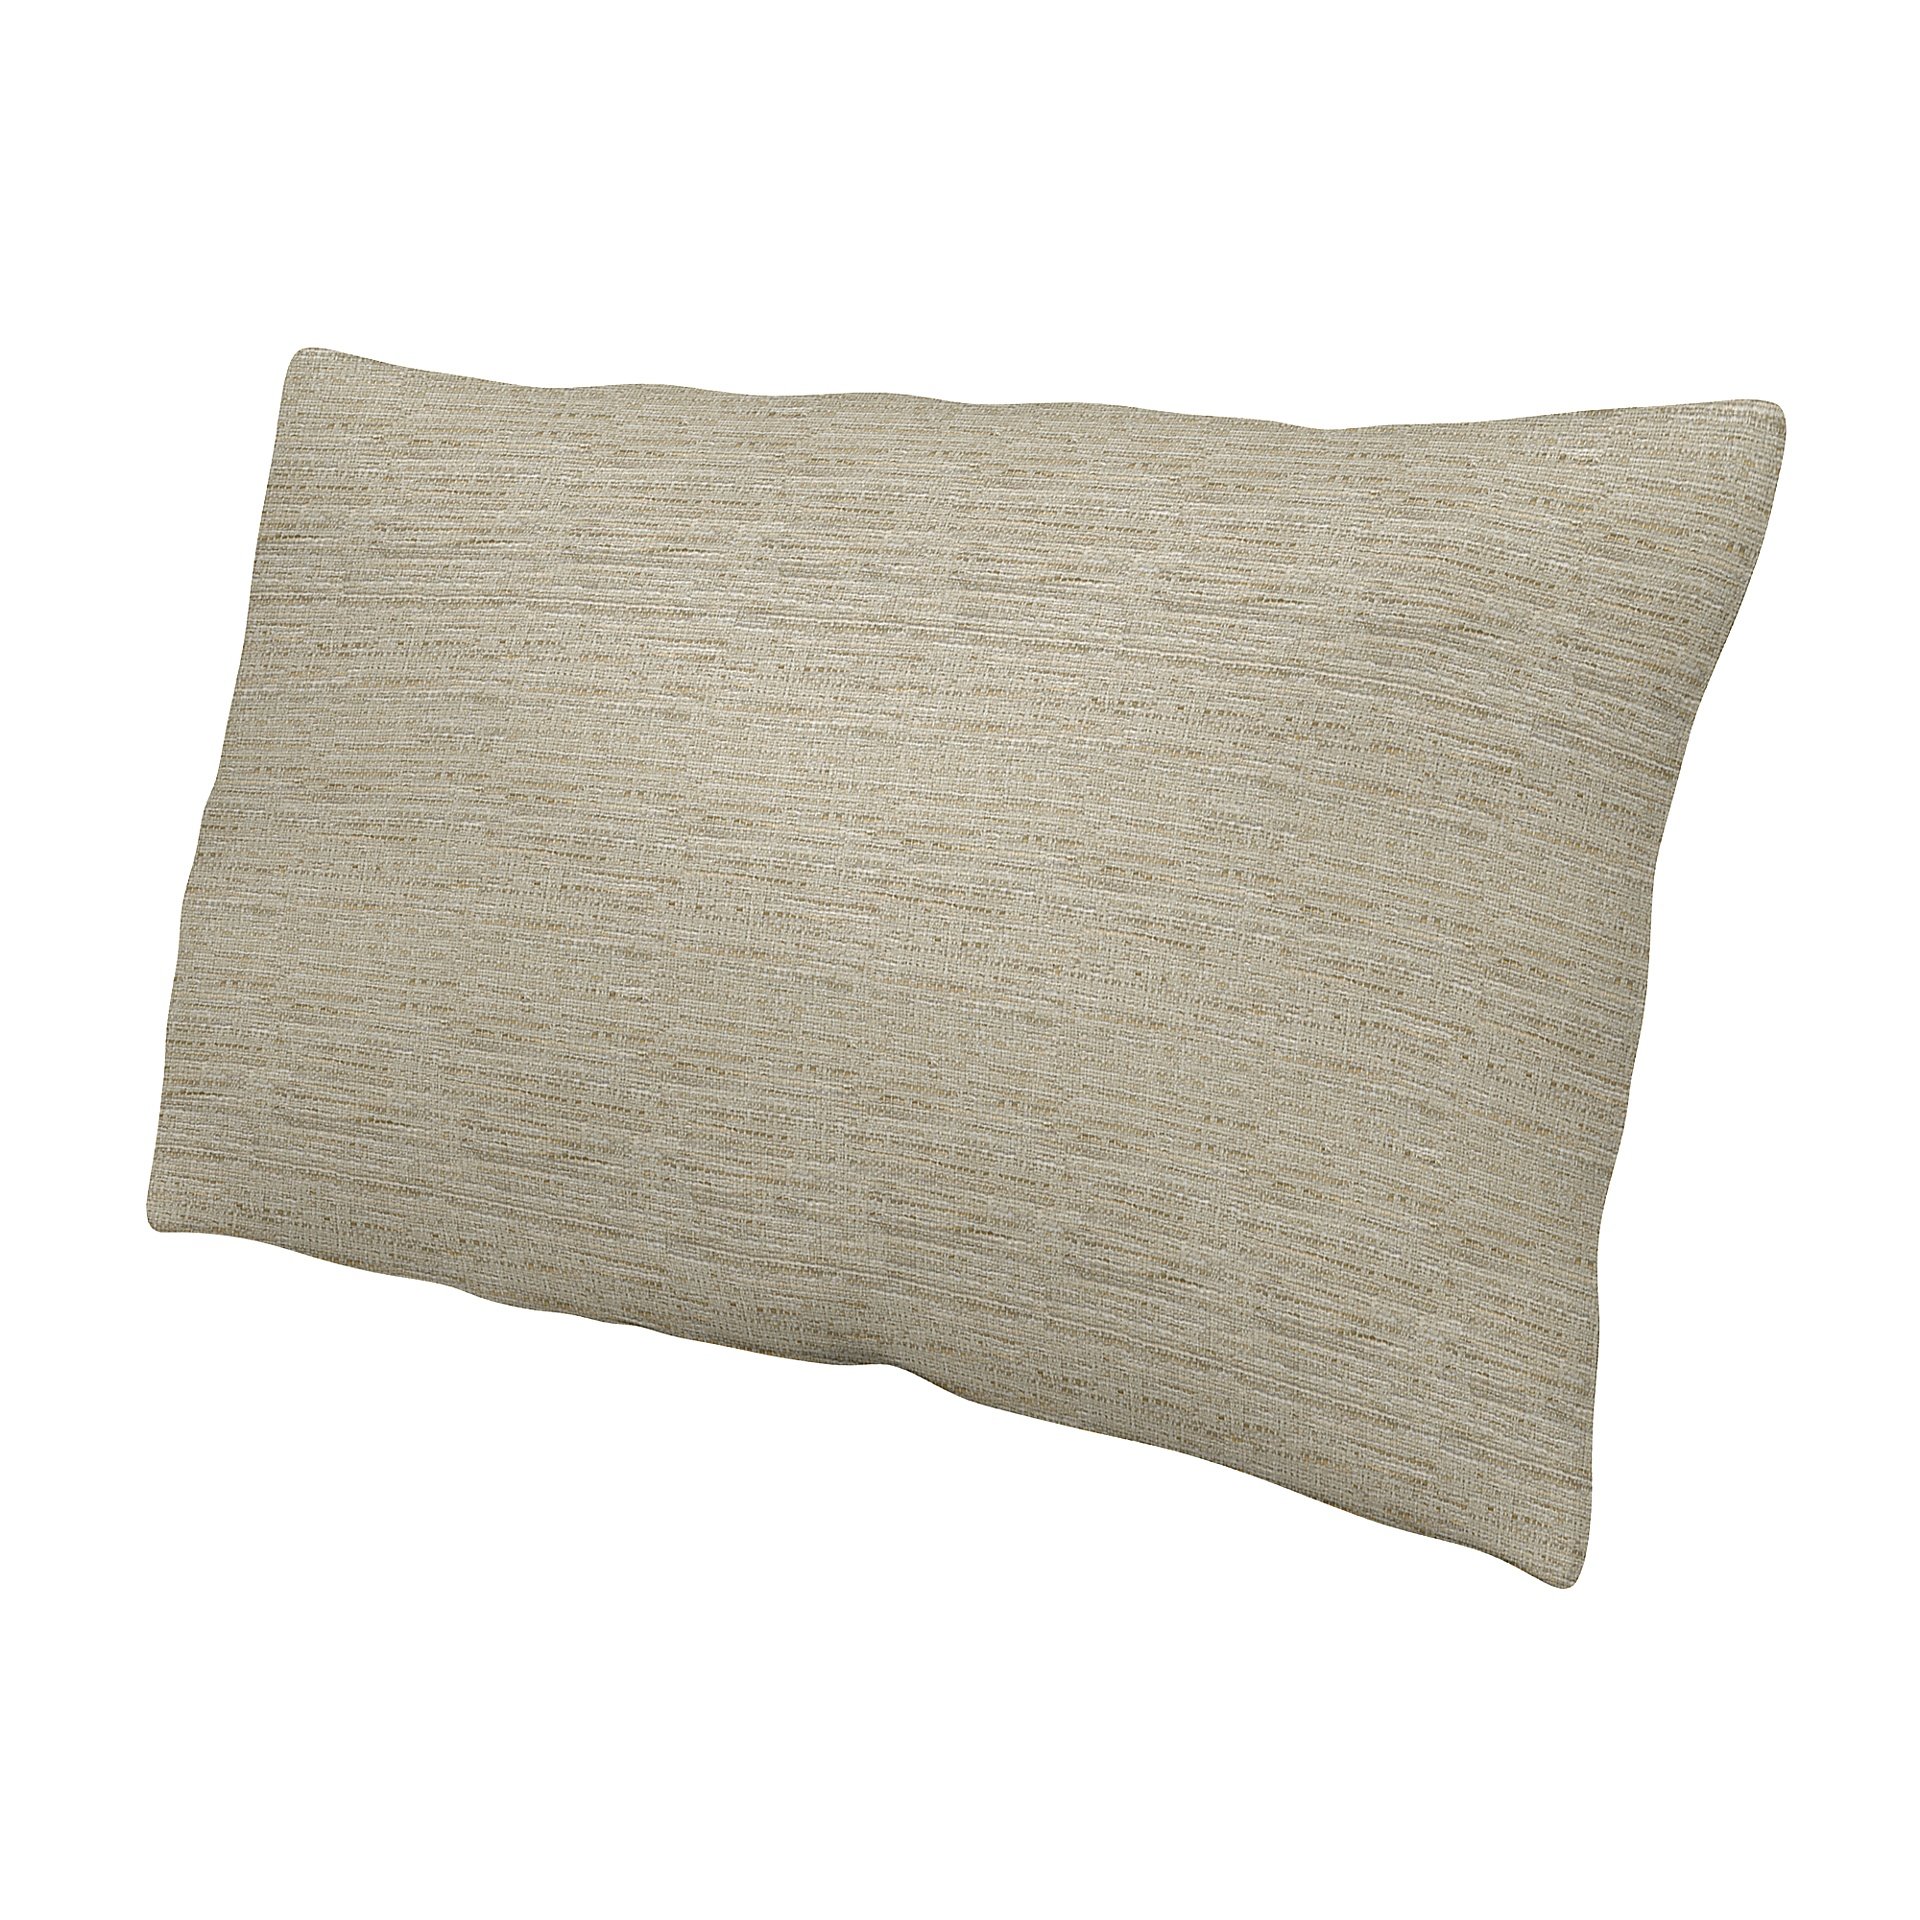 IKEA - Cushion Cover Ektorp 40x70 cm, Light Sand, Boucle & Texture - Bemz